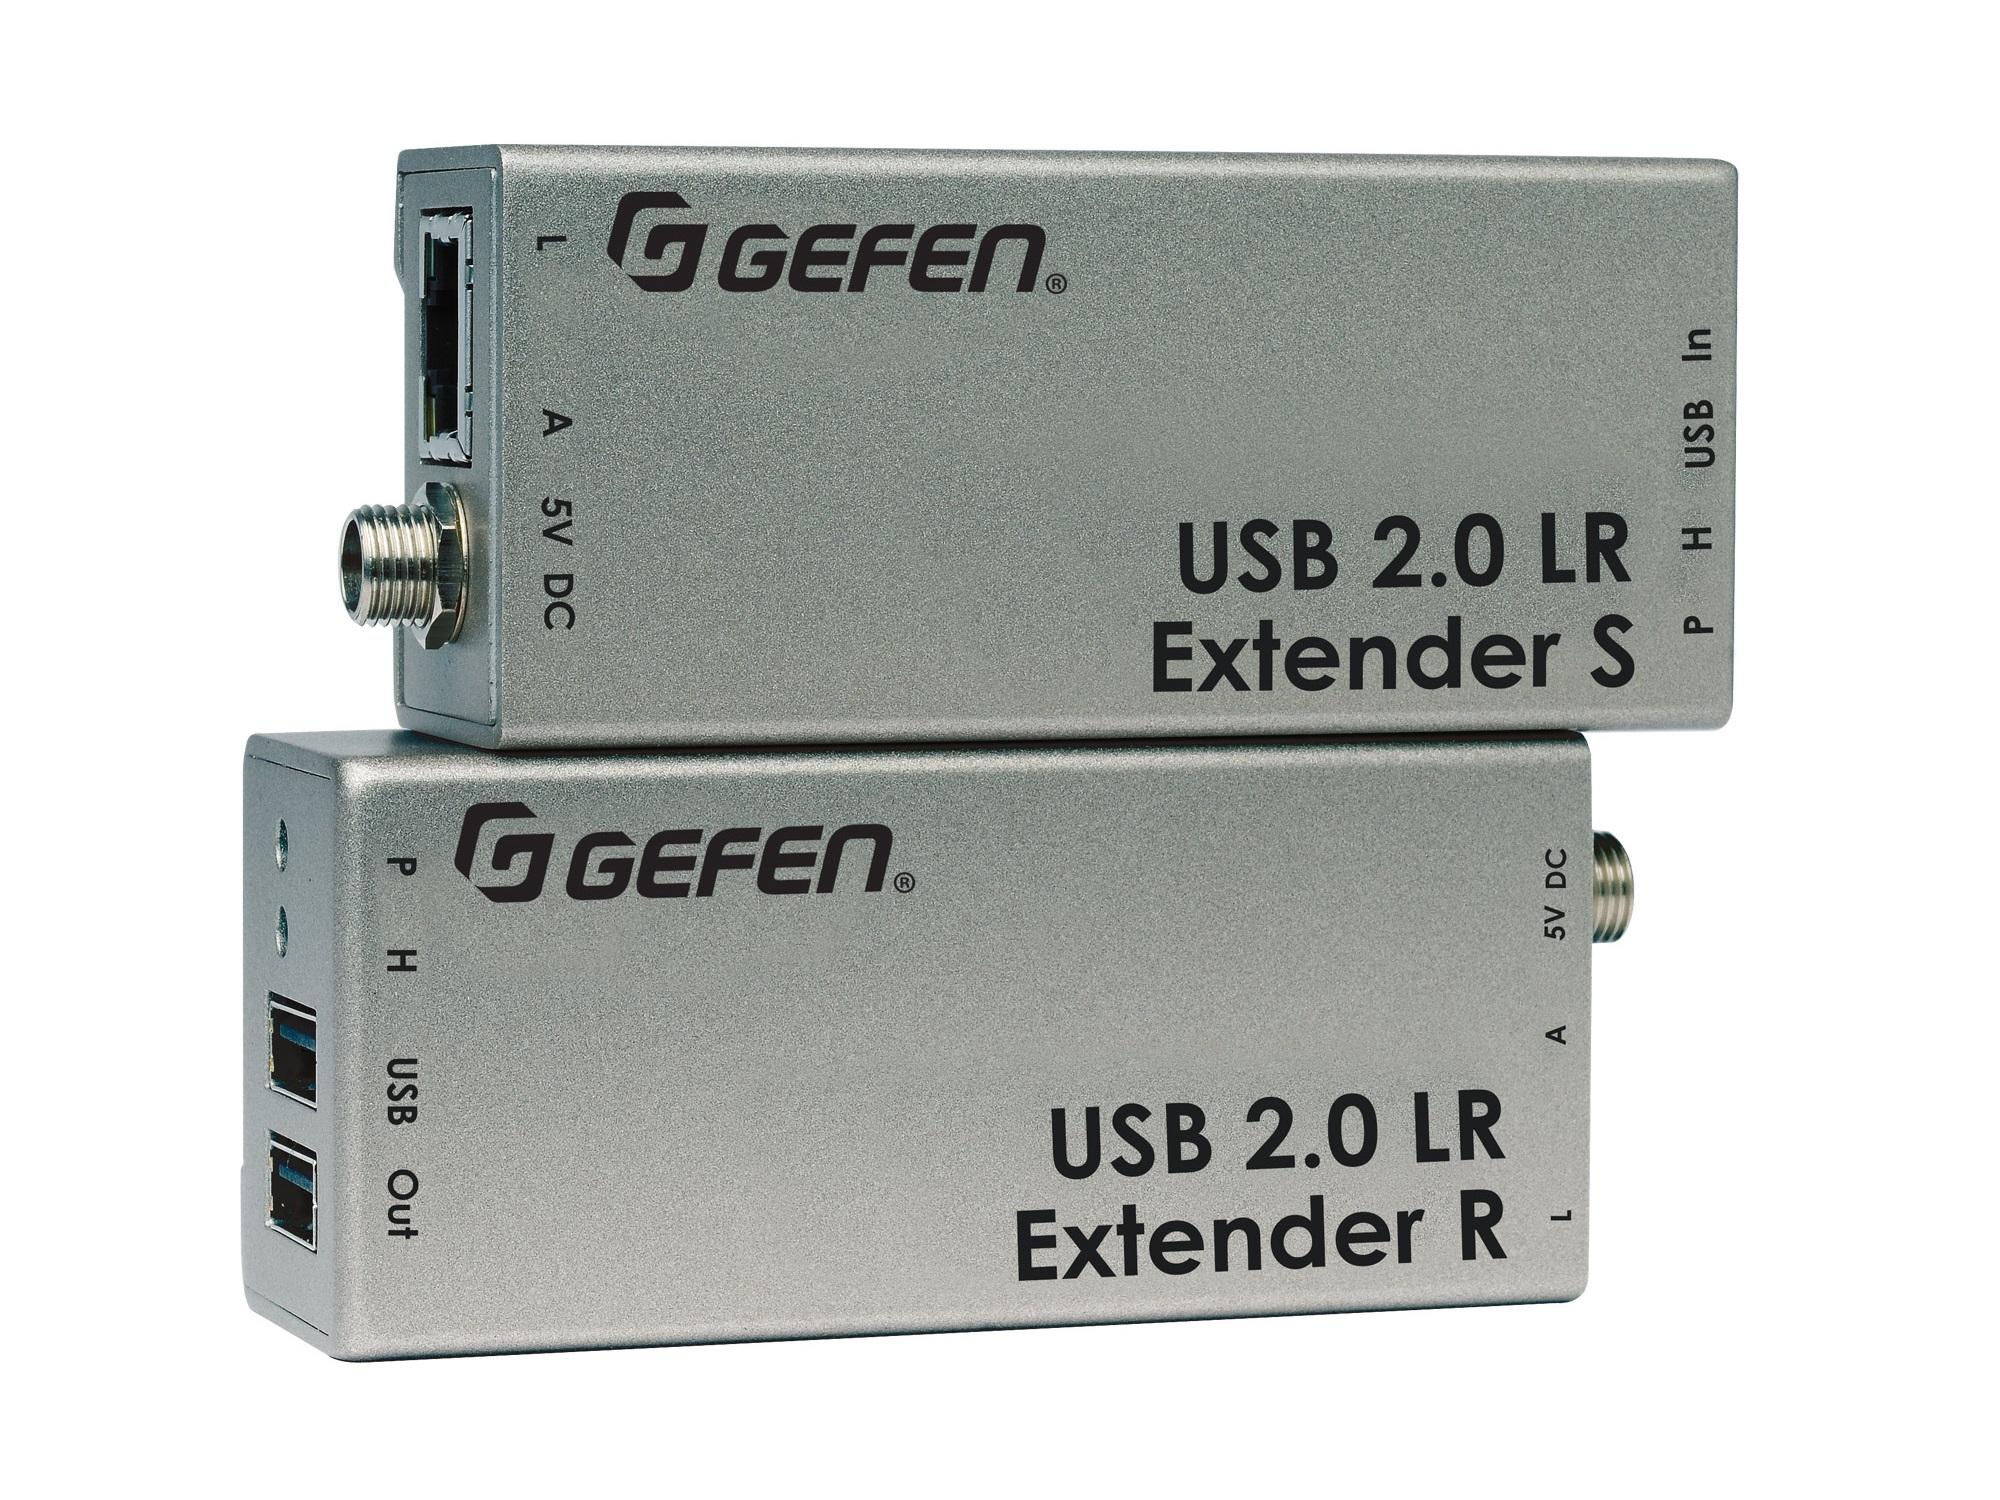 EXT-USB2.0-LR-b USB 2.0 Extender (Transmitter/Receiver) Kit by Gefen